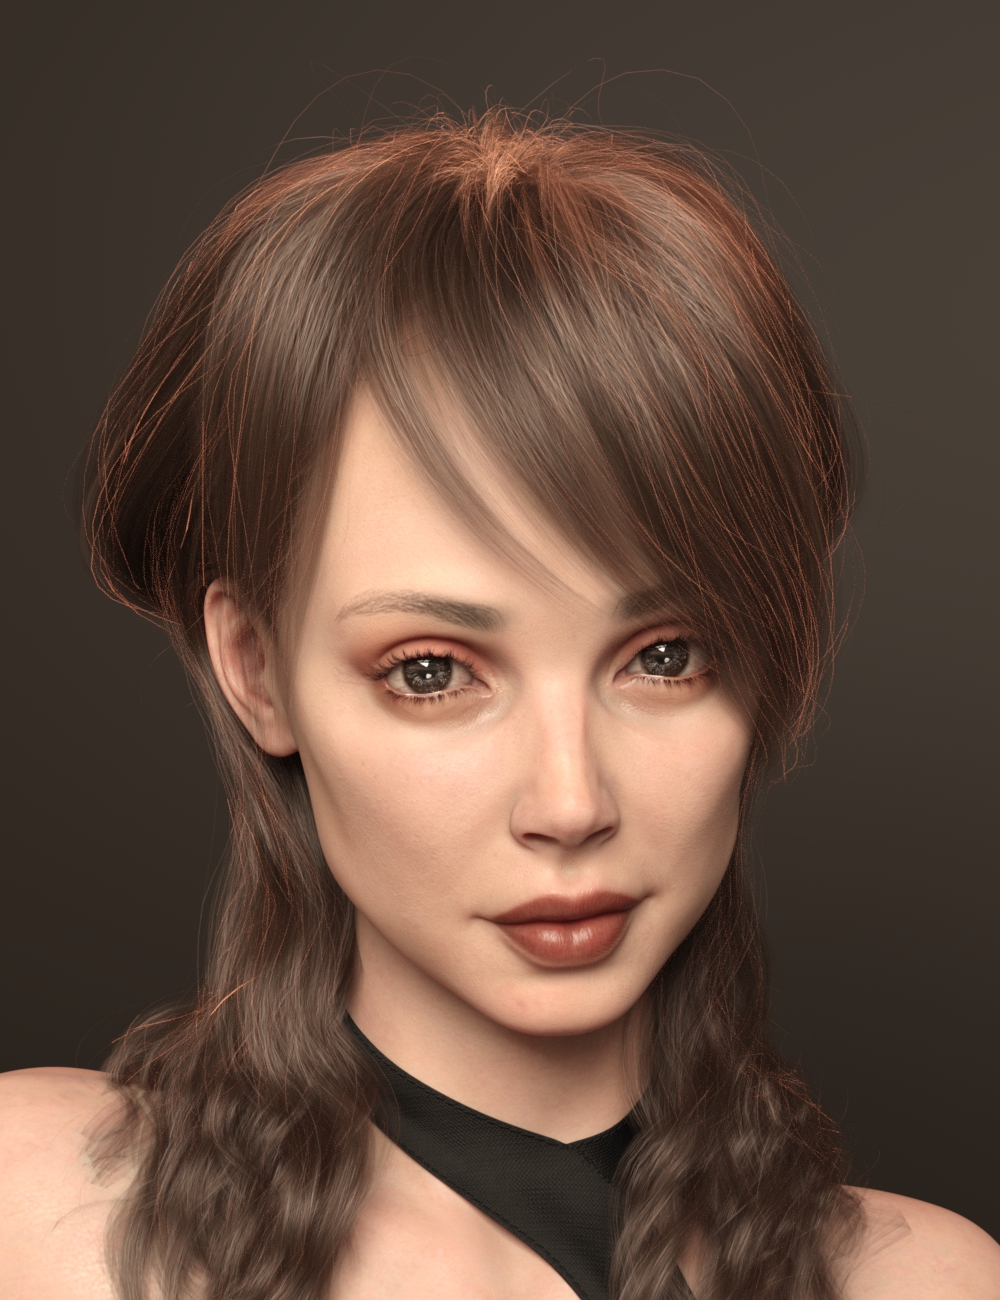 Uerica for Genesis 8.1 Female by: Ergou, 3D Models by Daz 3D